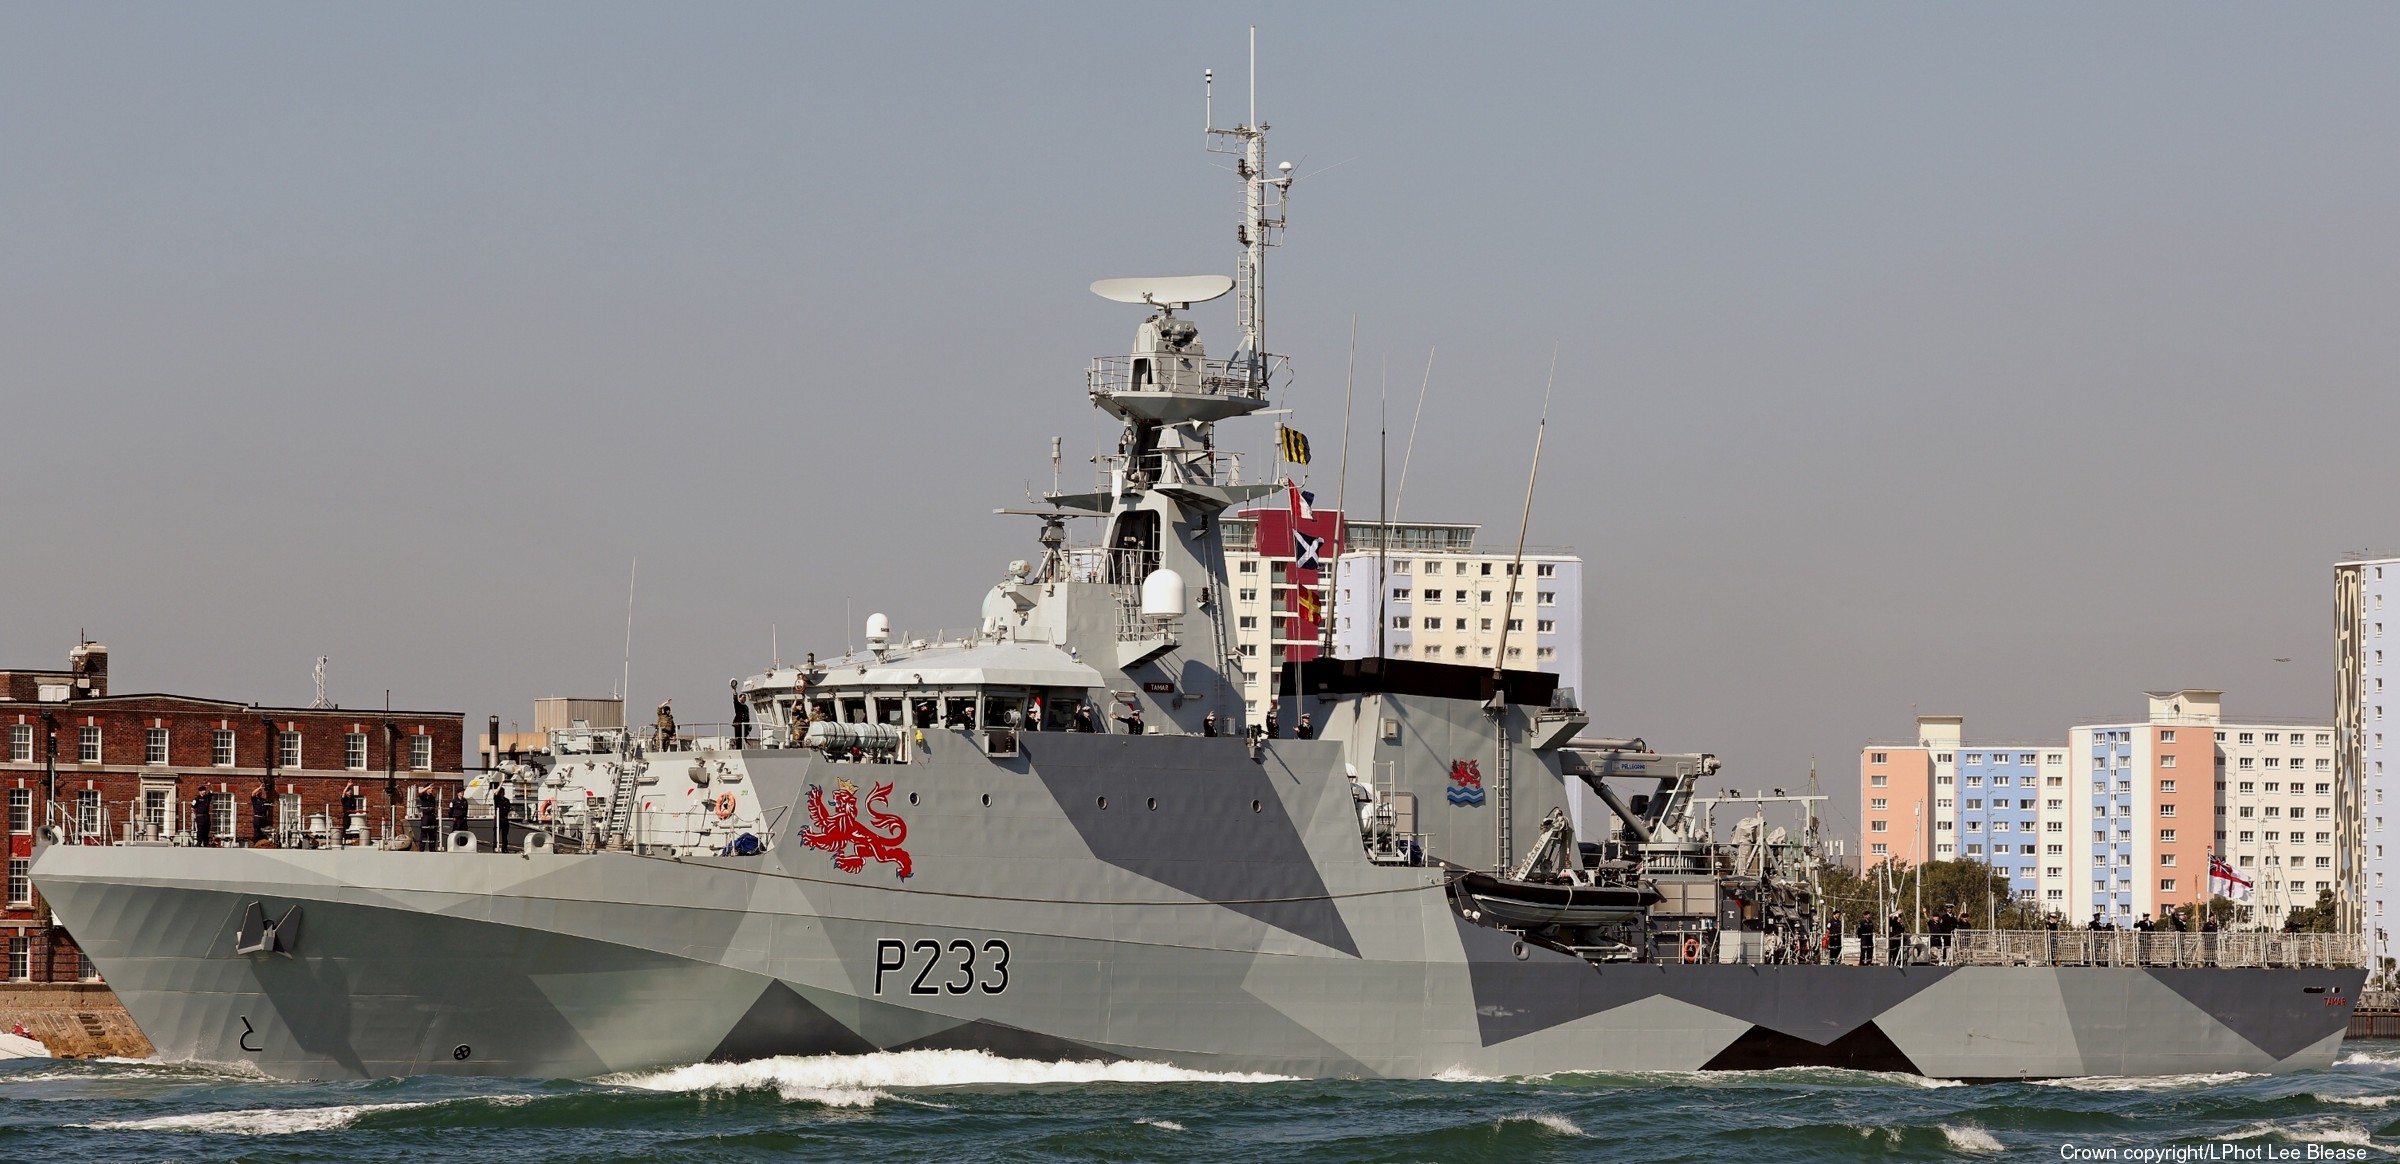 p233 hms tamar river class offshore patrol vessel opv royal navy 39